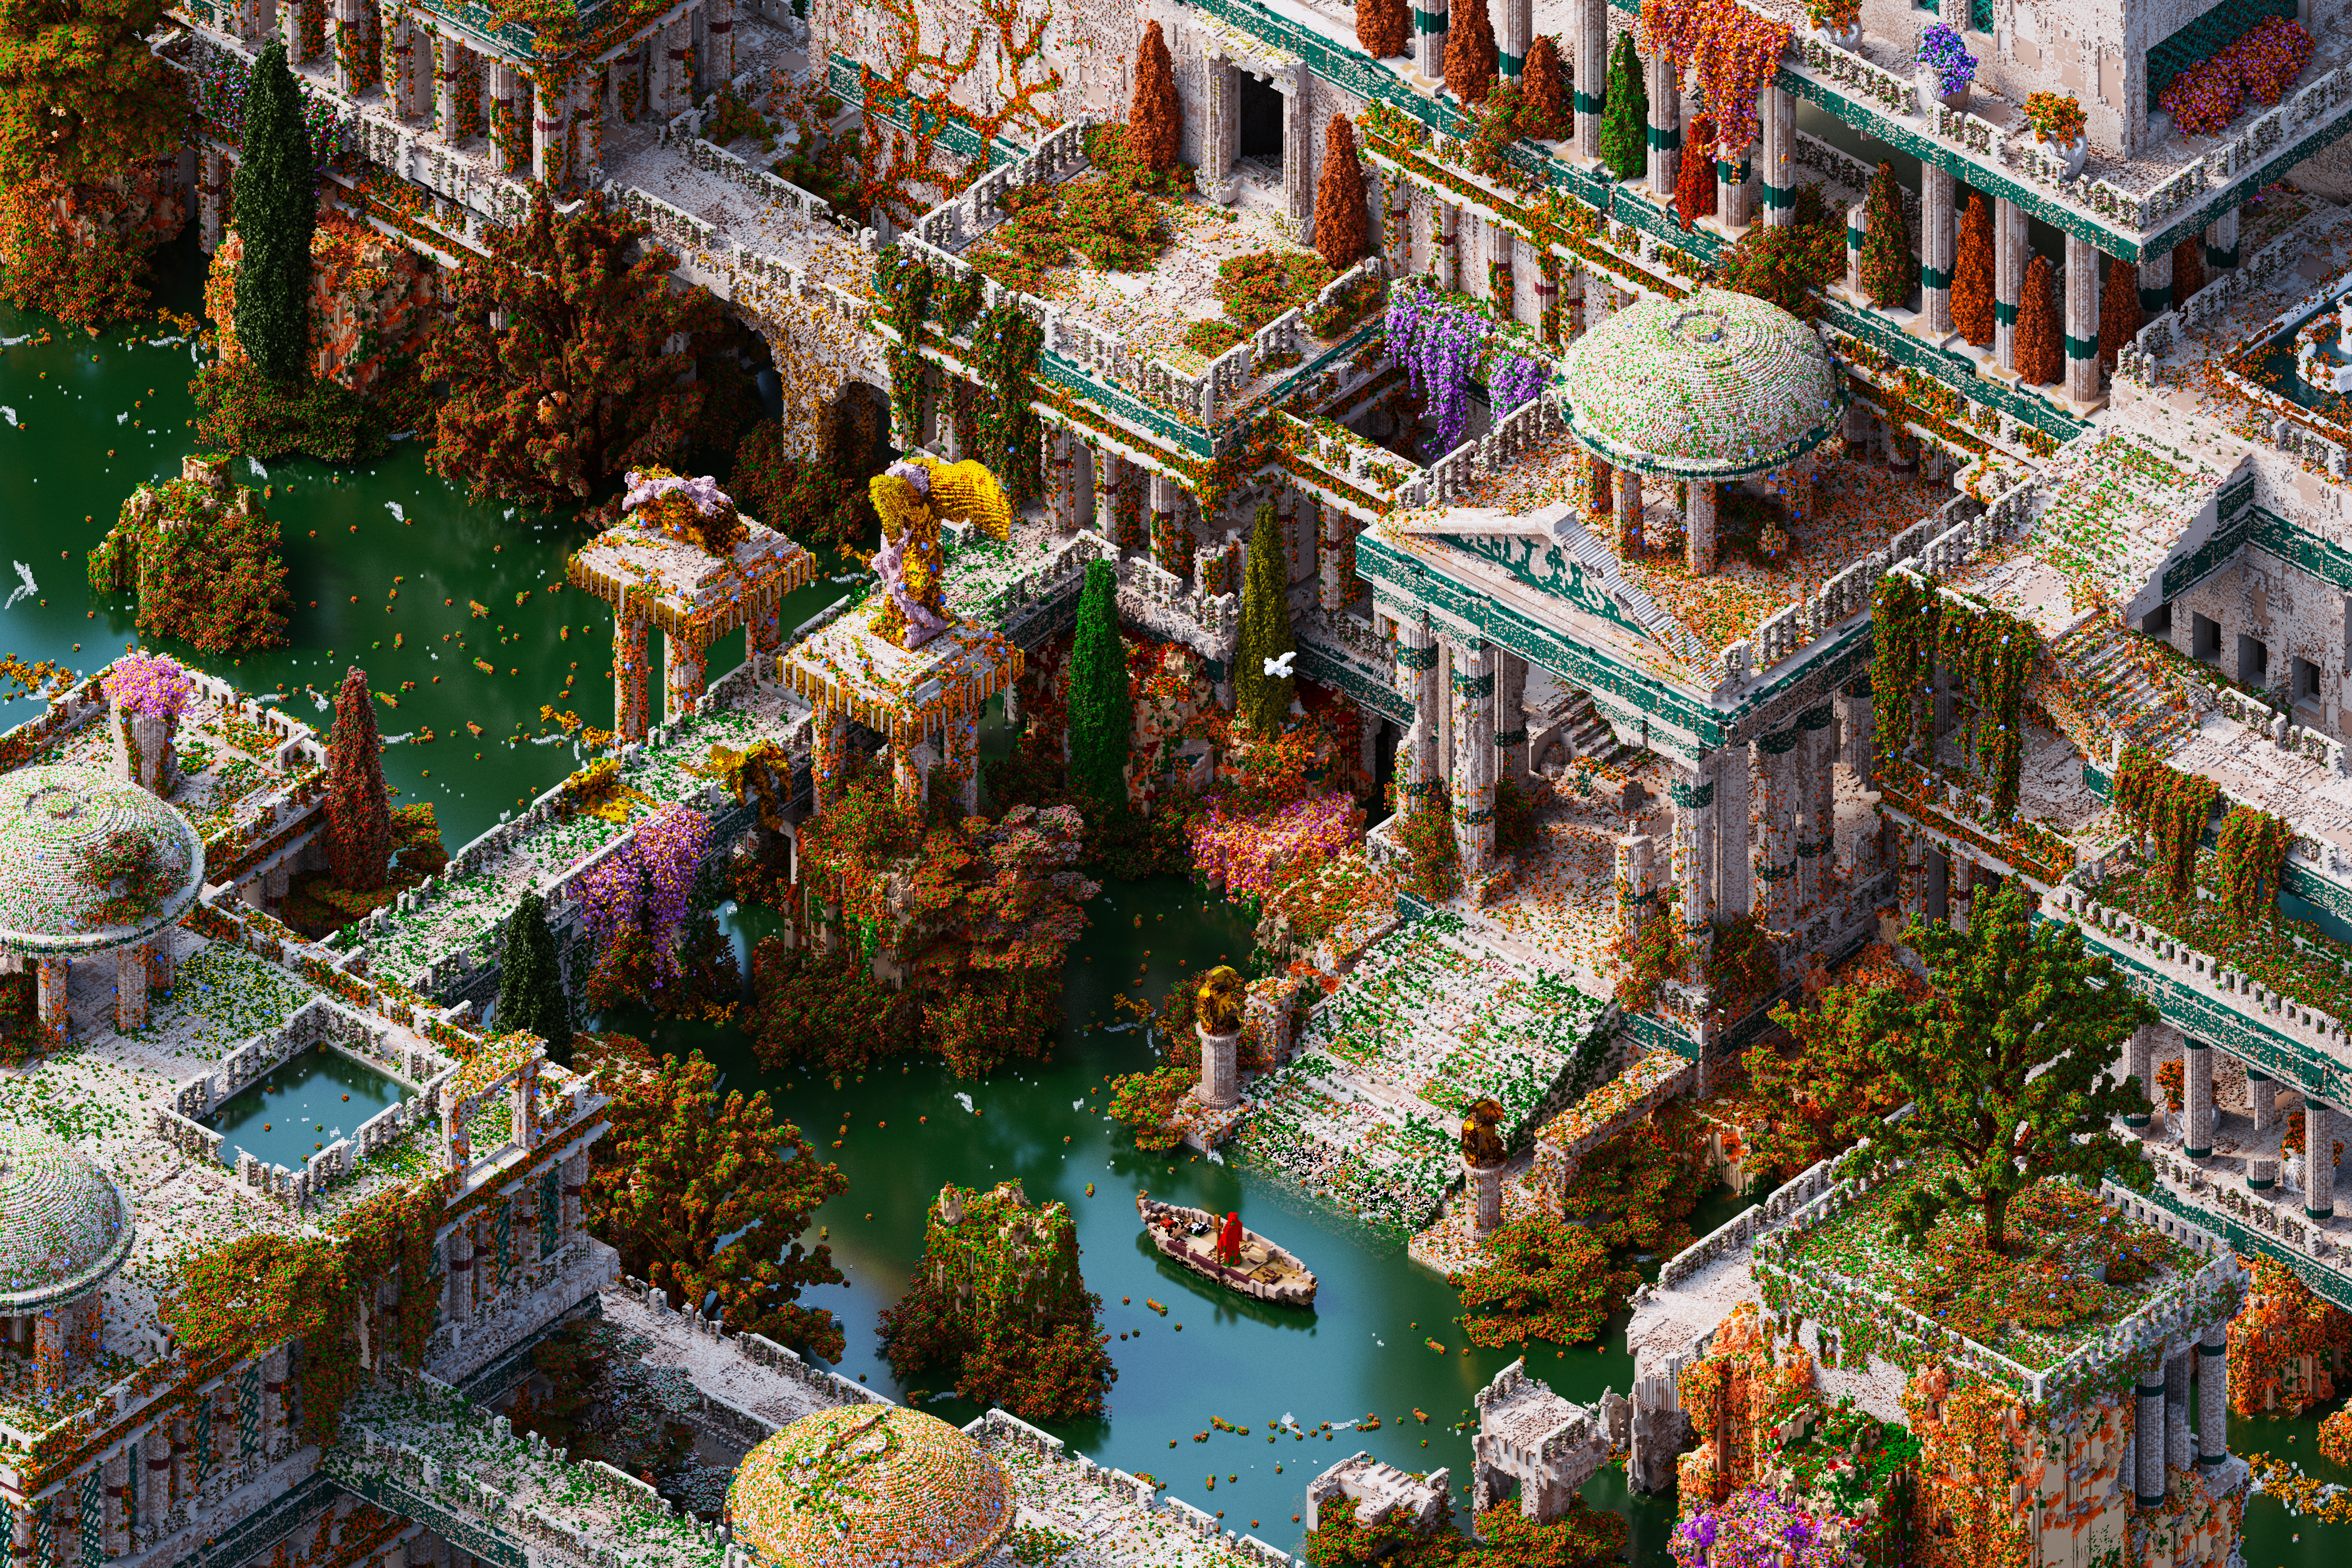 Digital Art Artwork Illustration Voxels Pixels City Ancient River Water Boat Architecture Building I 5000x3333